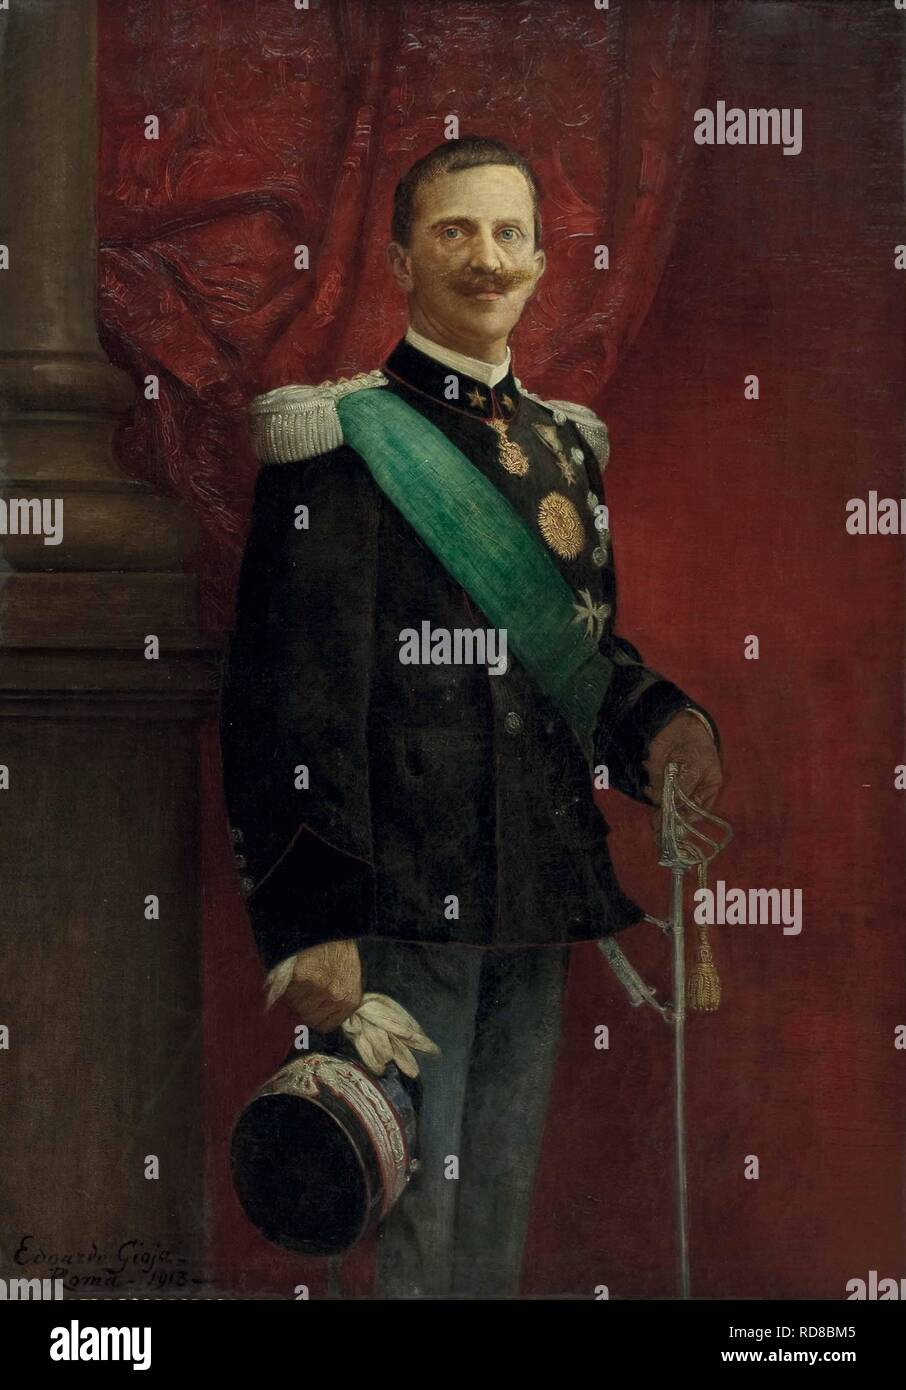 Portrait von Victor Emmanuel III. (1869-1947), König von Italien. Museum: private Sammlung. Autor: Edoardo Gioja. Stockfoto